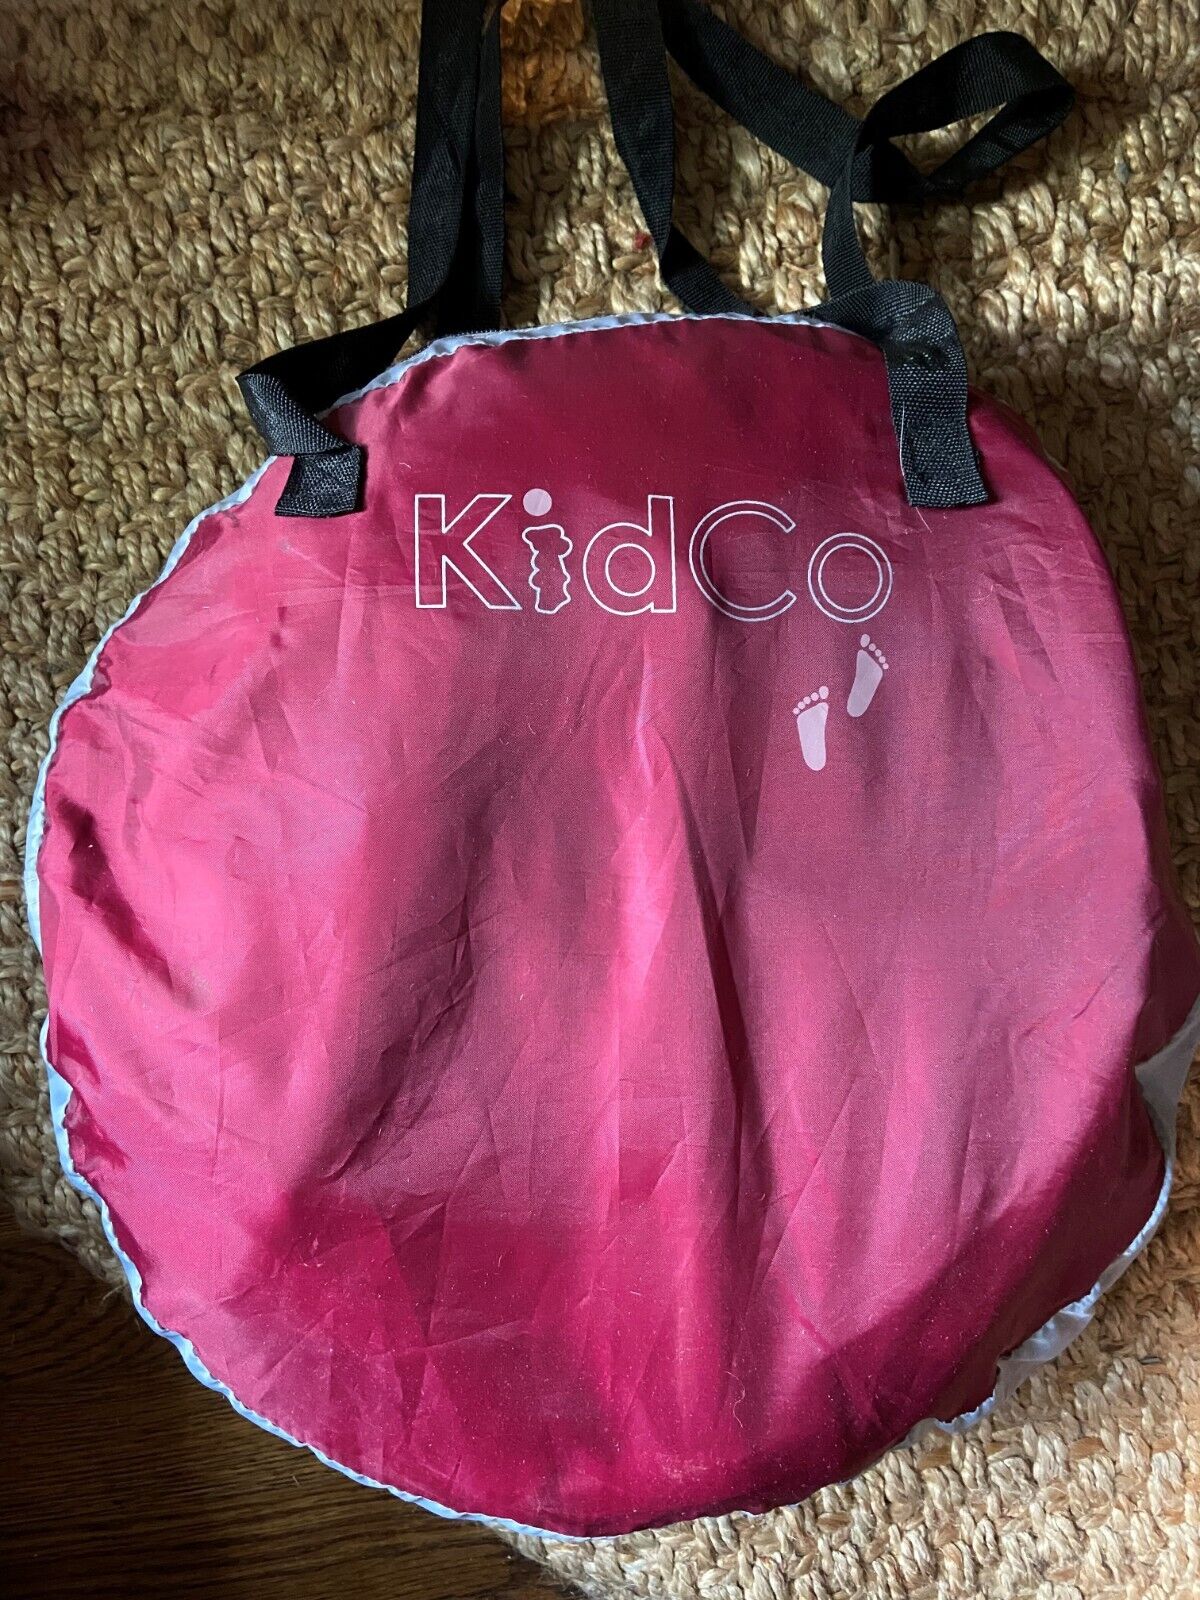 Kidco Peapod Plus - Portable Children’s Travel Bed/tent